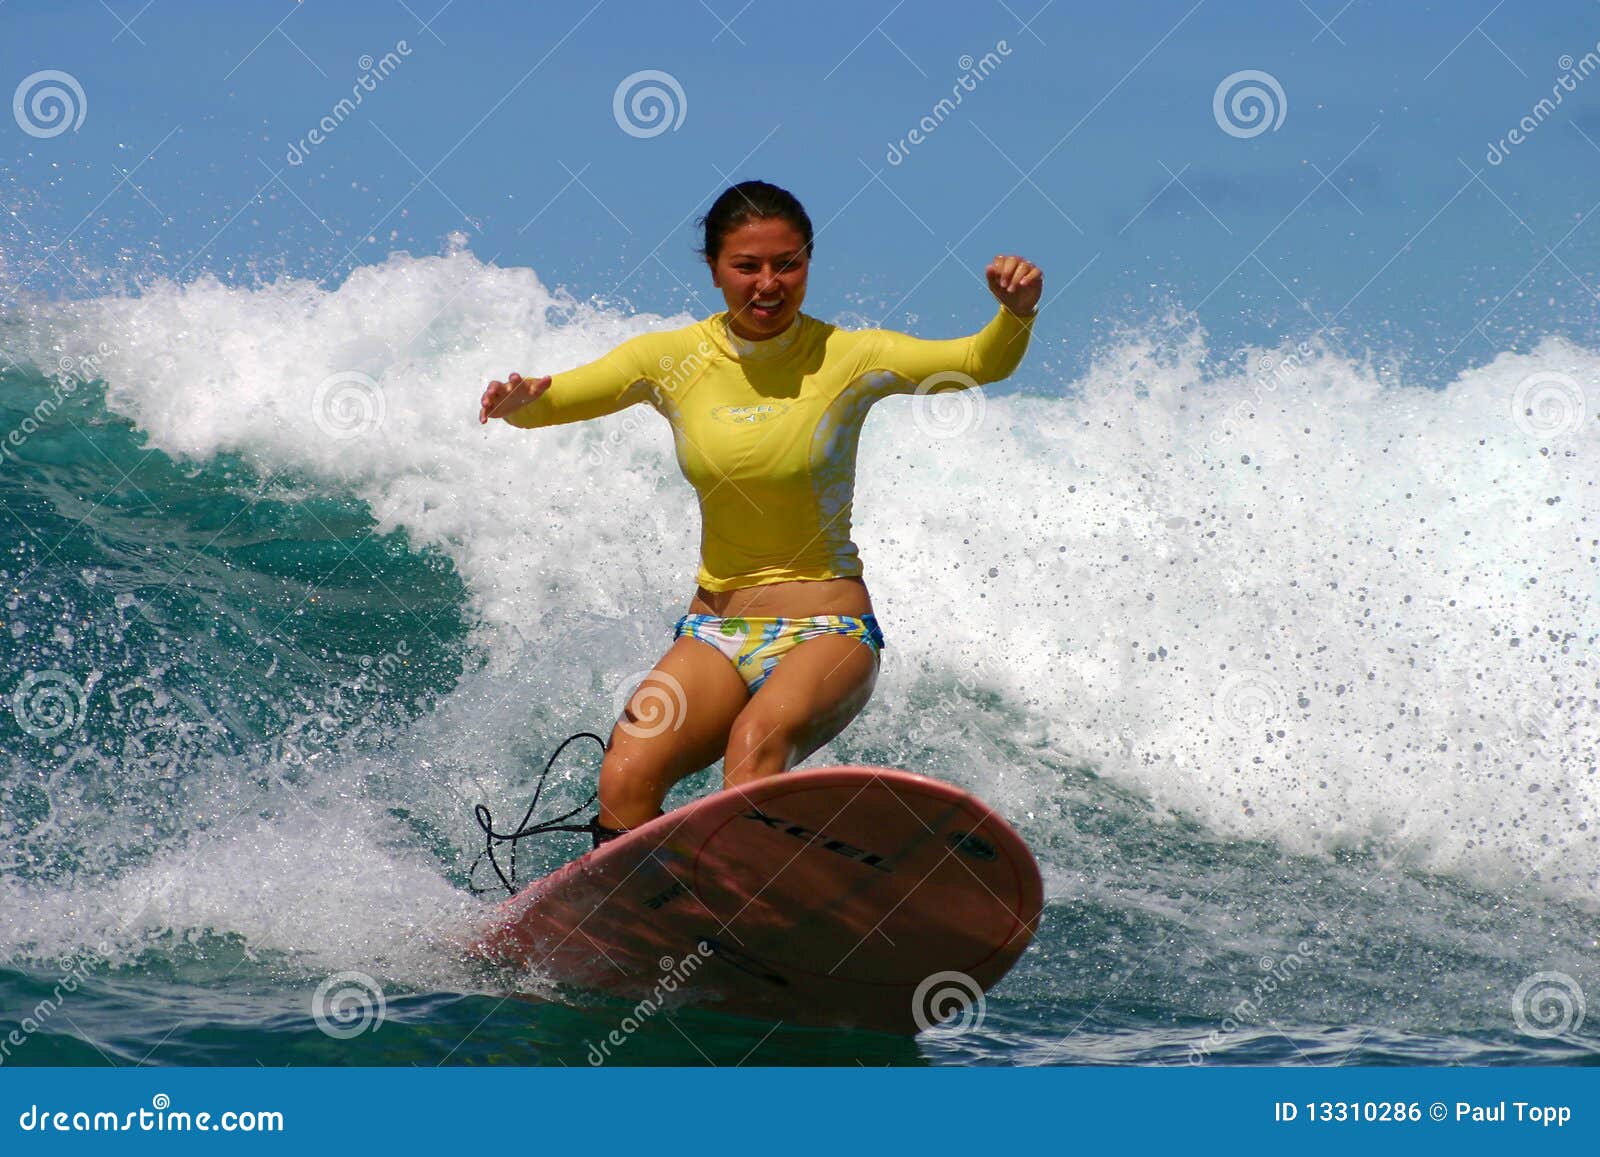 Hawaii Surfer Models